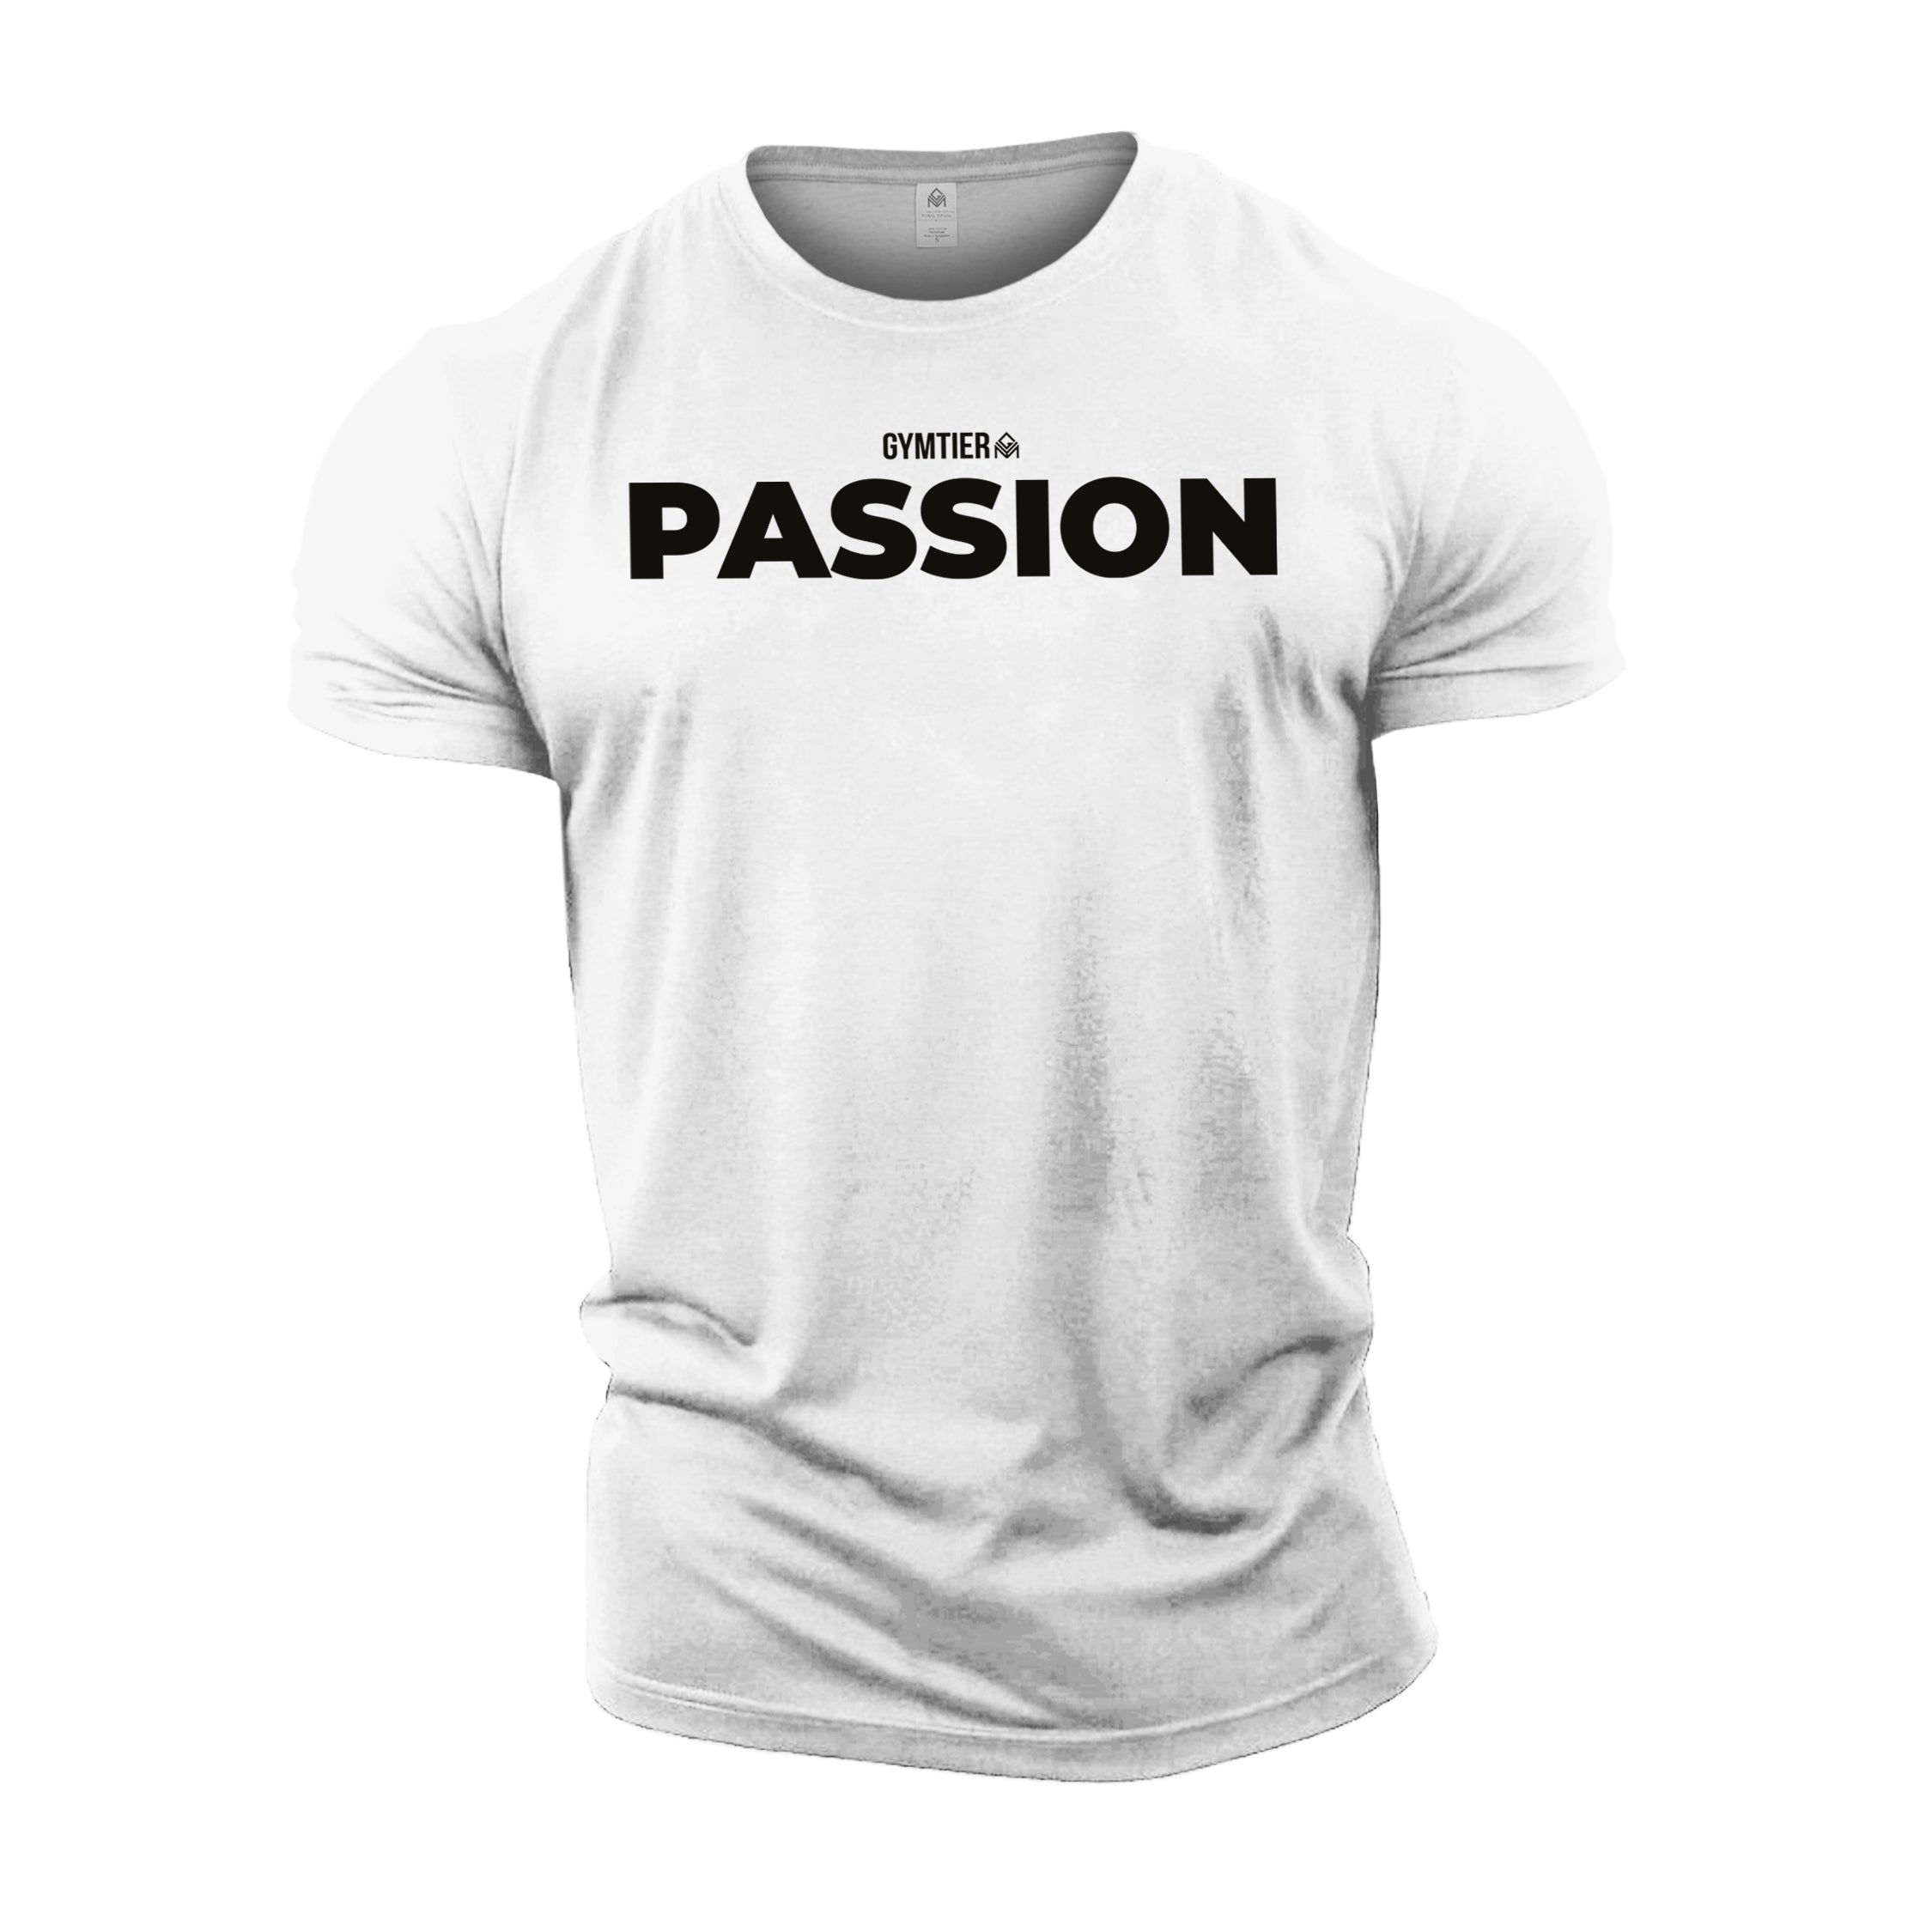 GYMTIER Passion T-Shirt